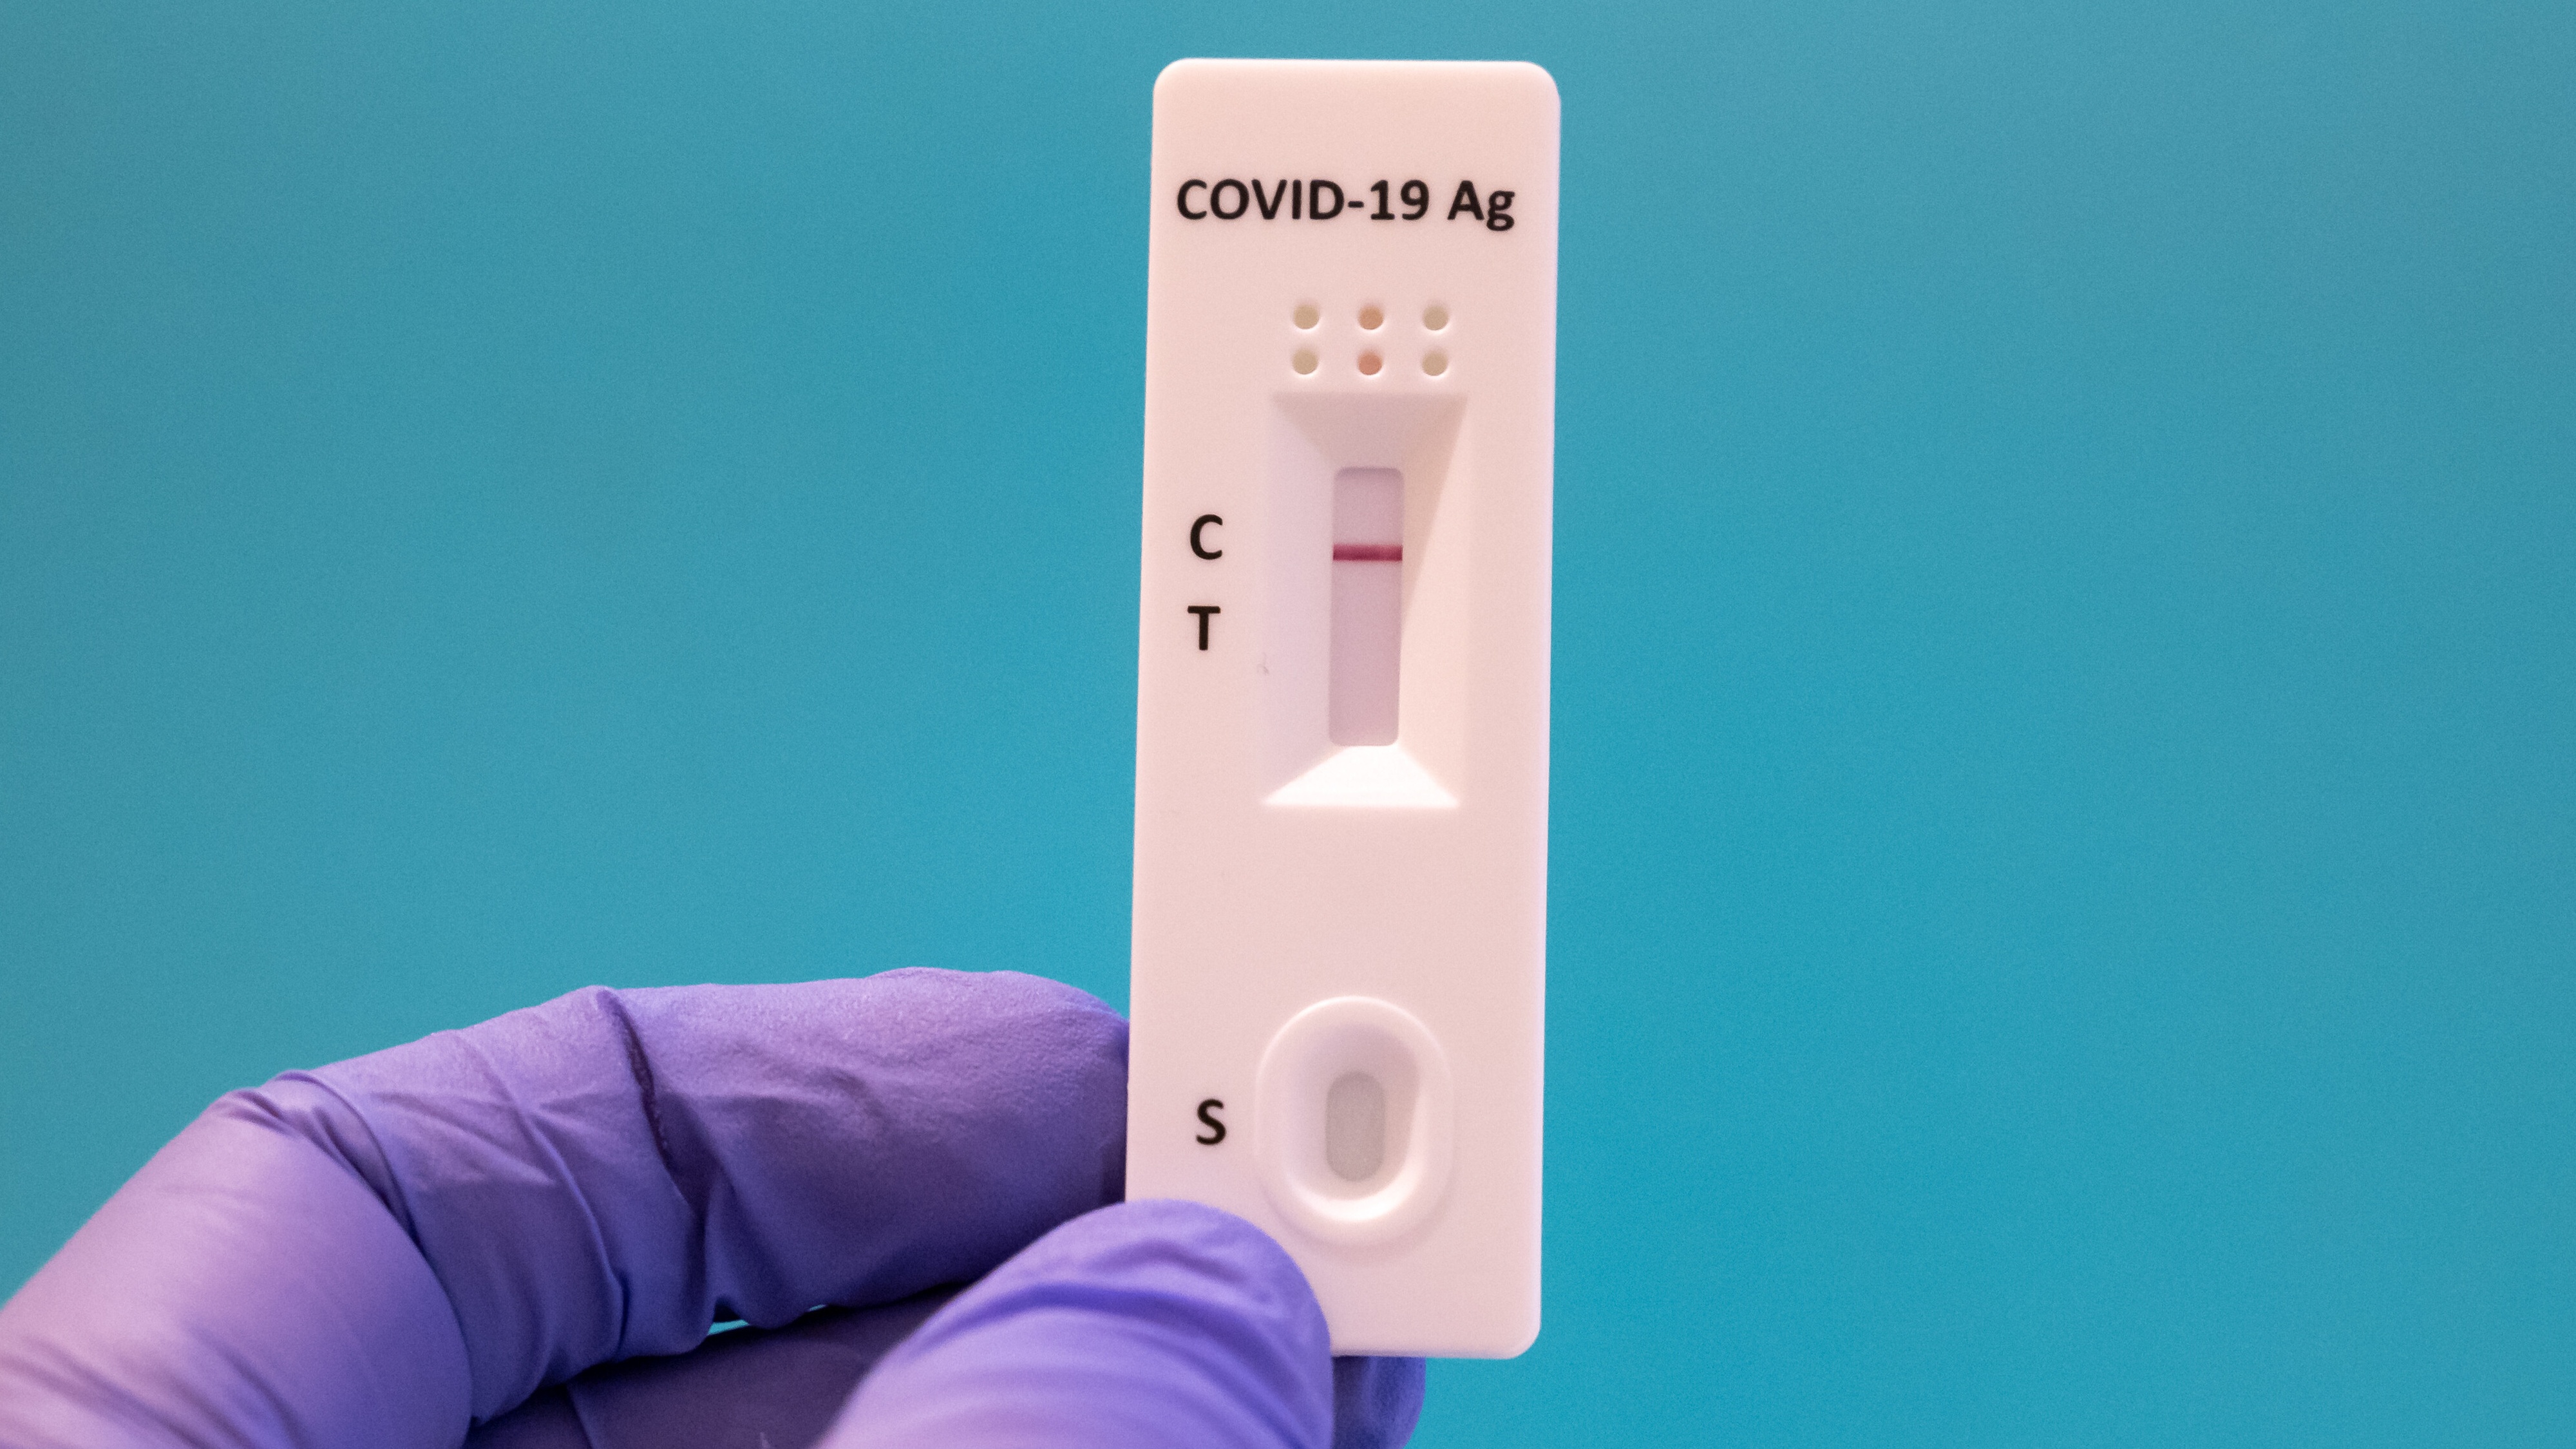 A negative Covid-19 antigen test